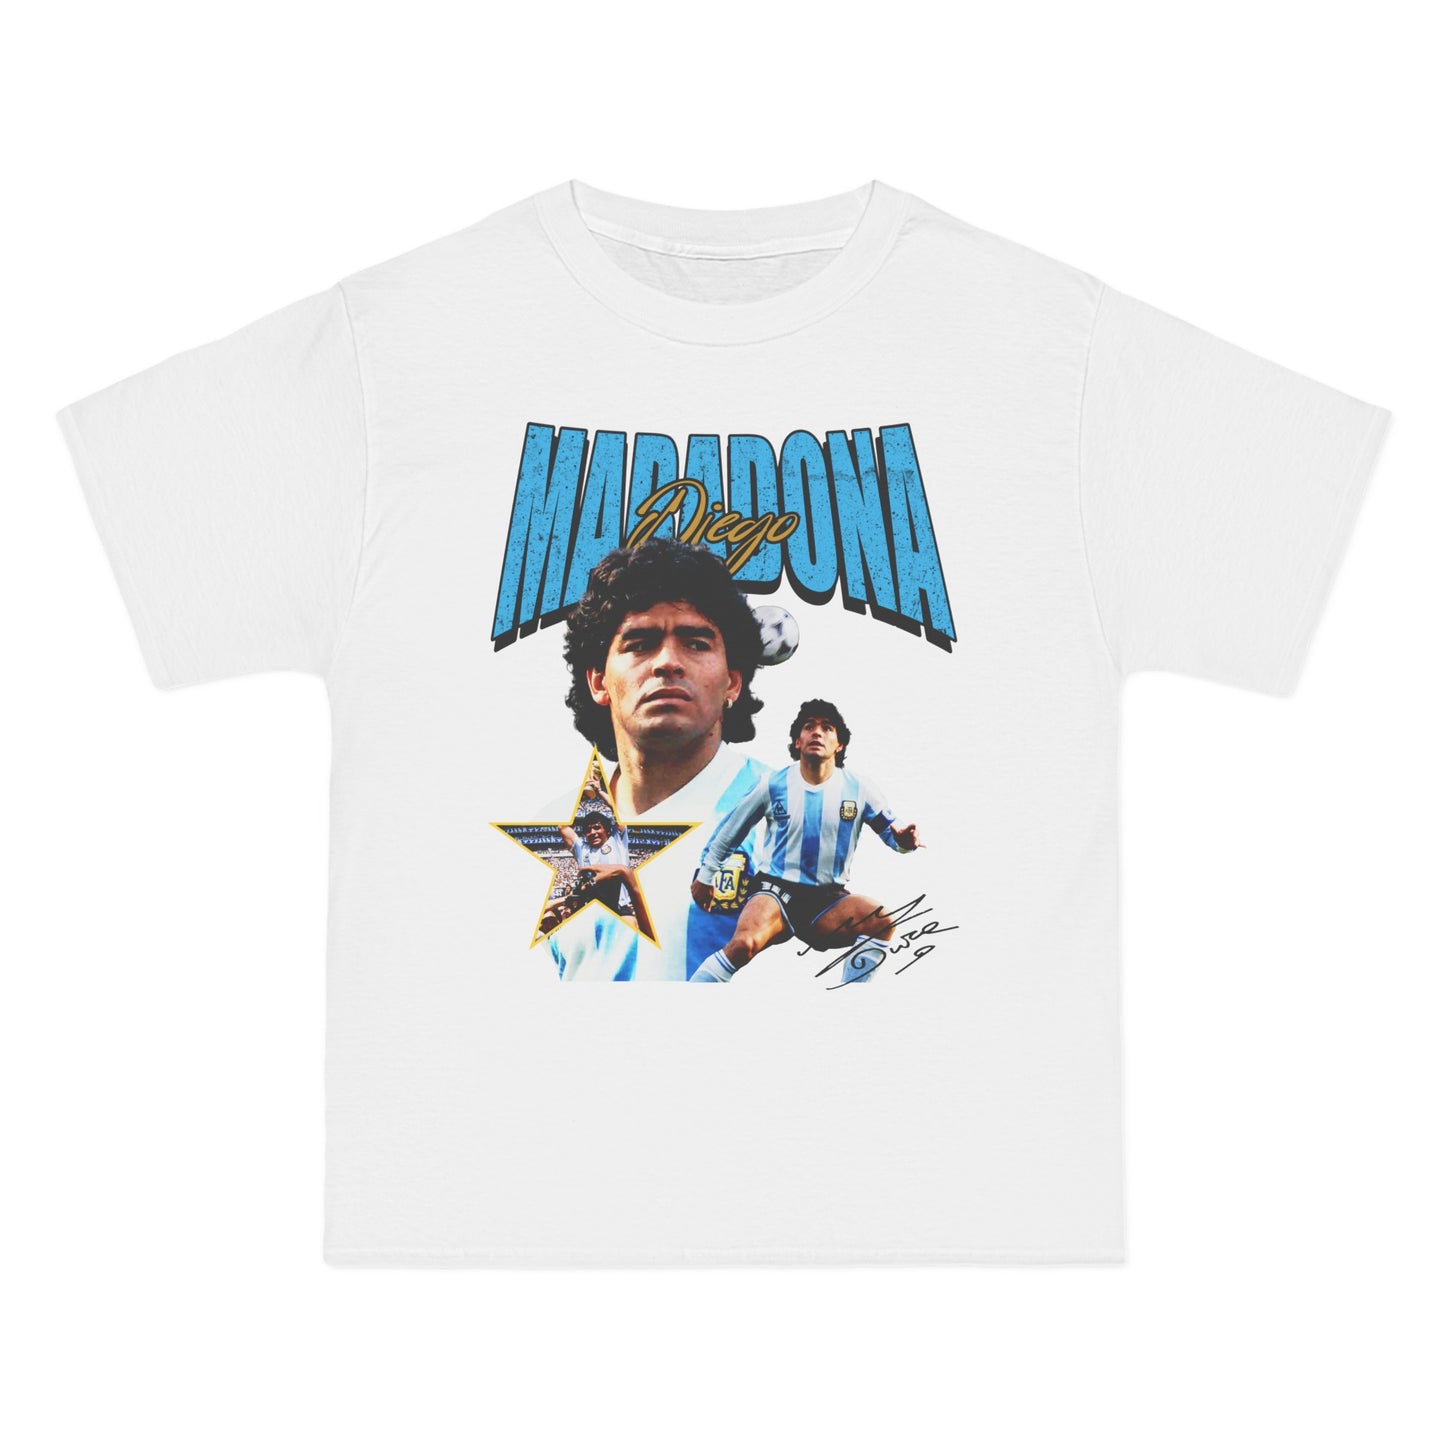 Diego Maradona "El Pibe de Oro" Argentina Graphic T-Shirt